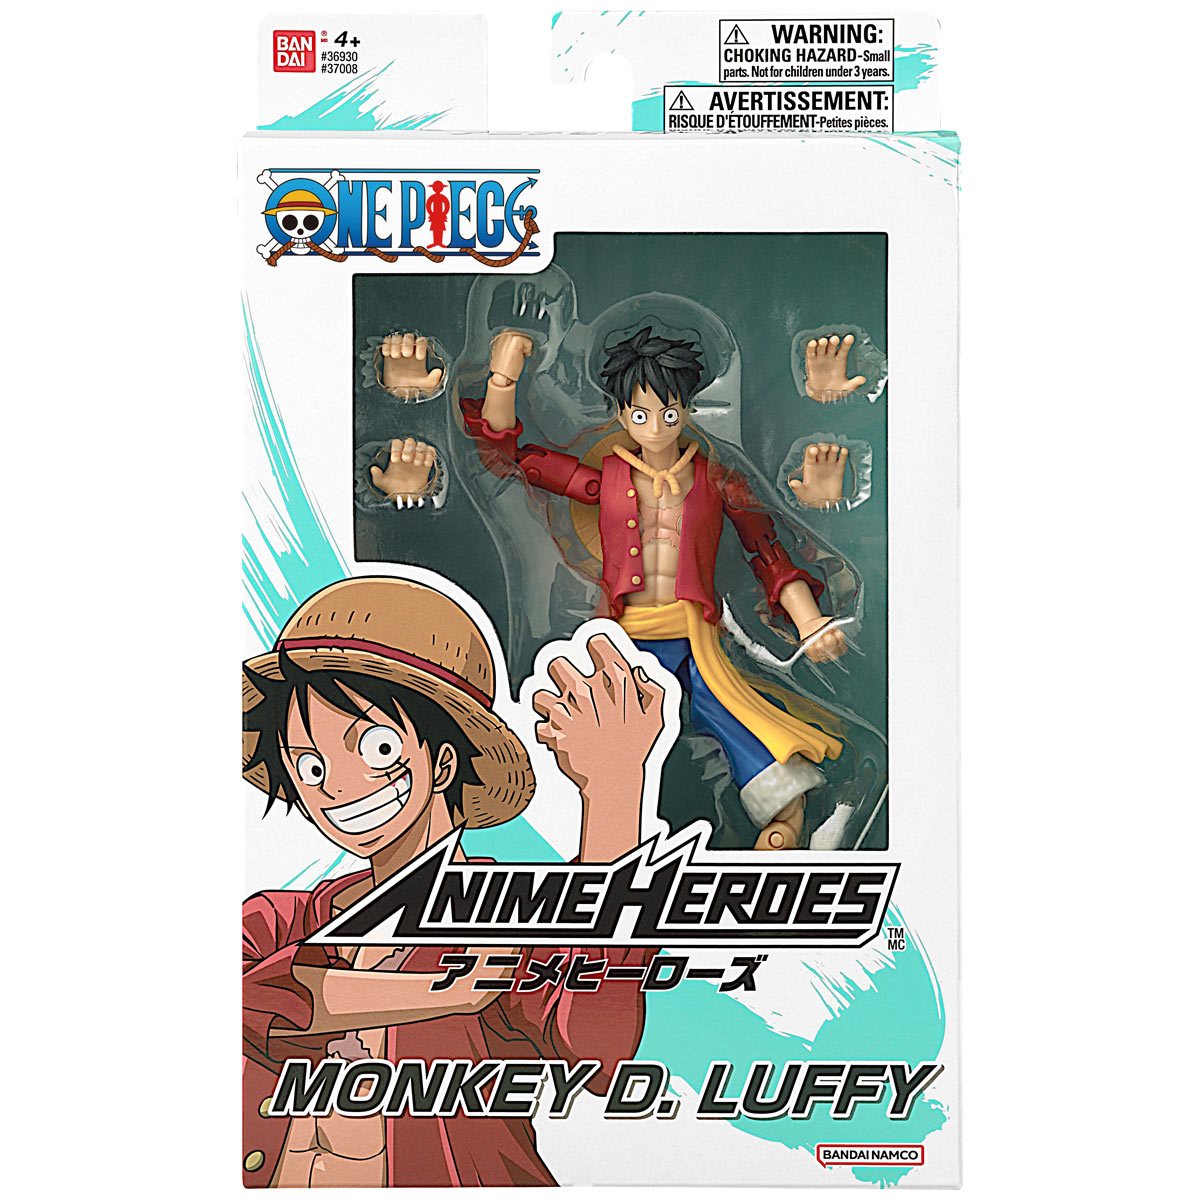 ANIME HEROES  One Piece figūrėlė su priedais, 16 cm - Monkey D. Luffy